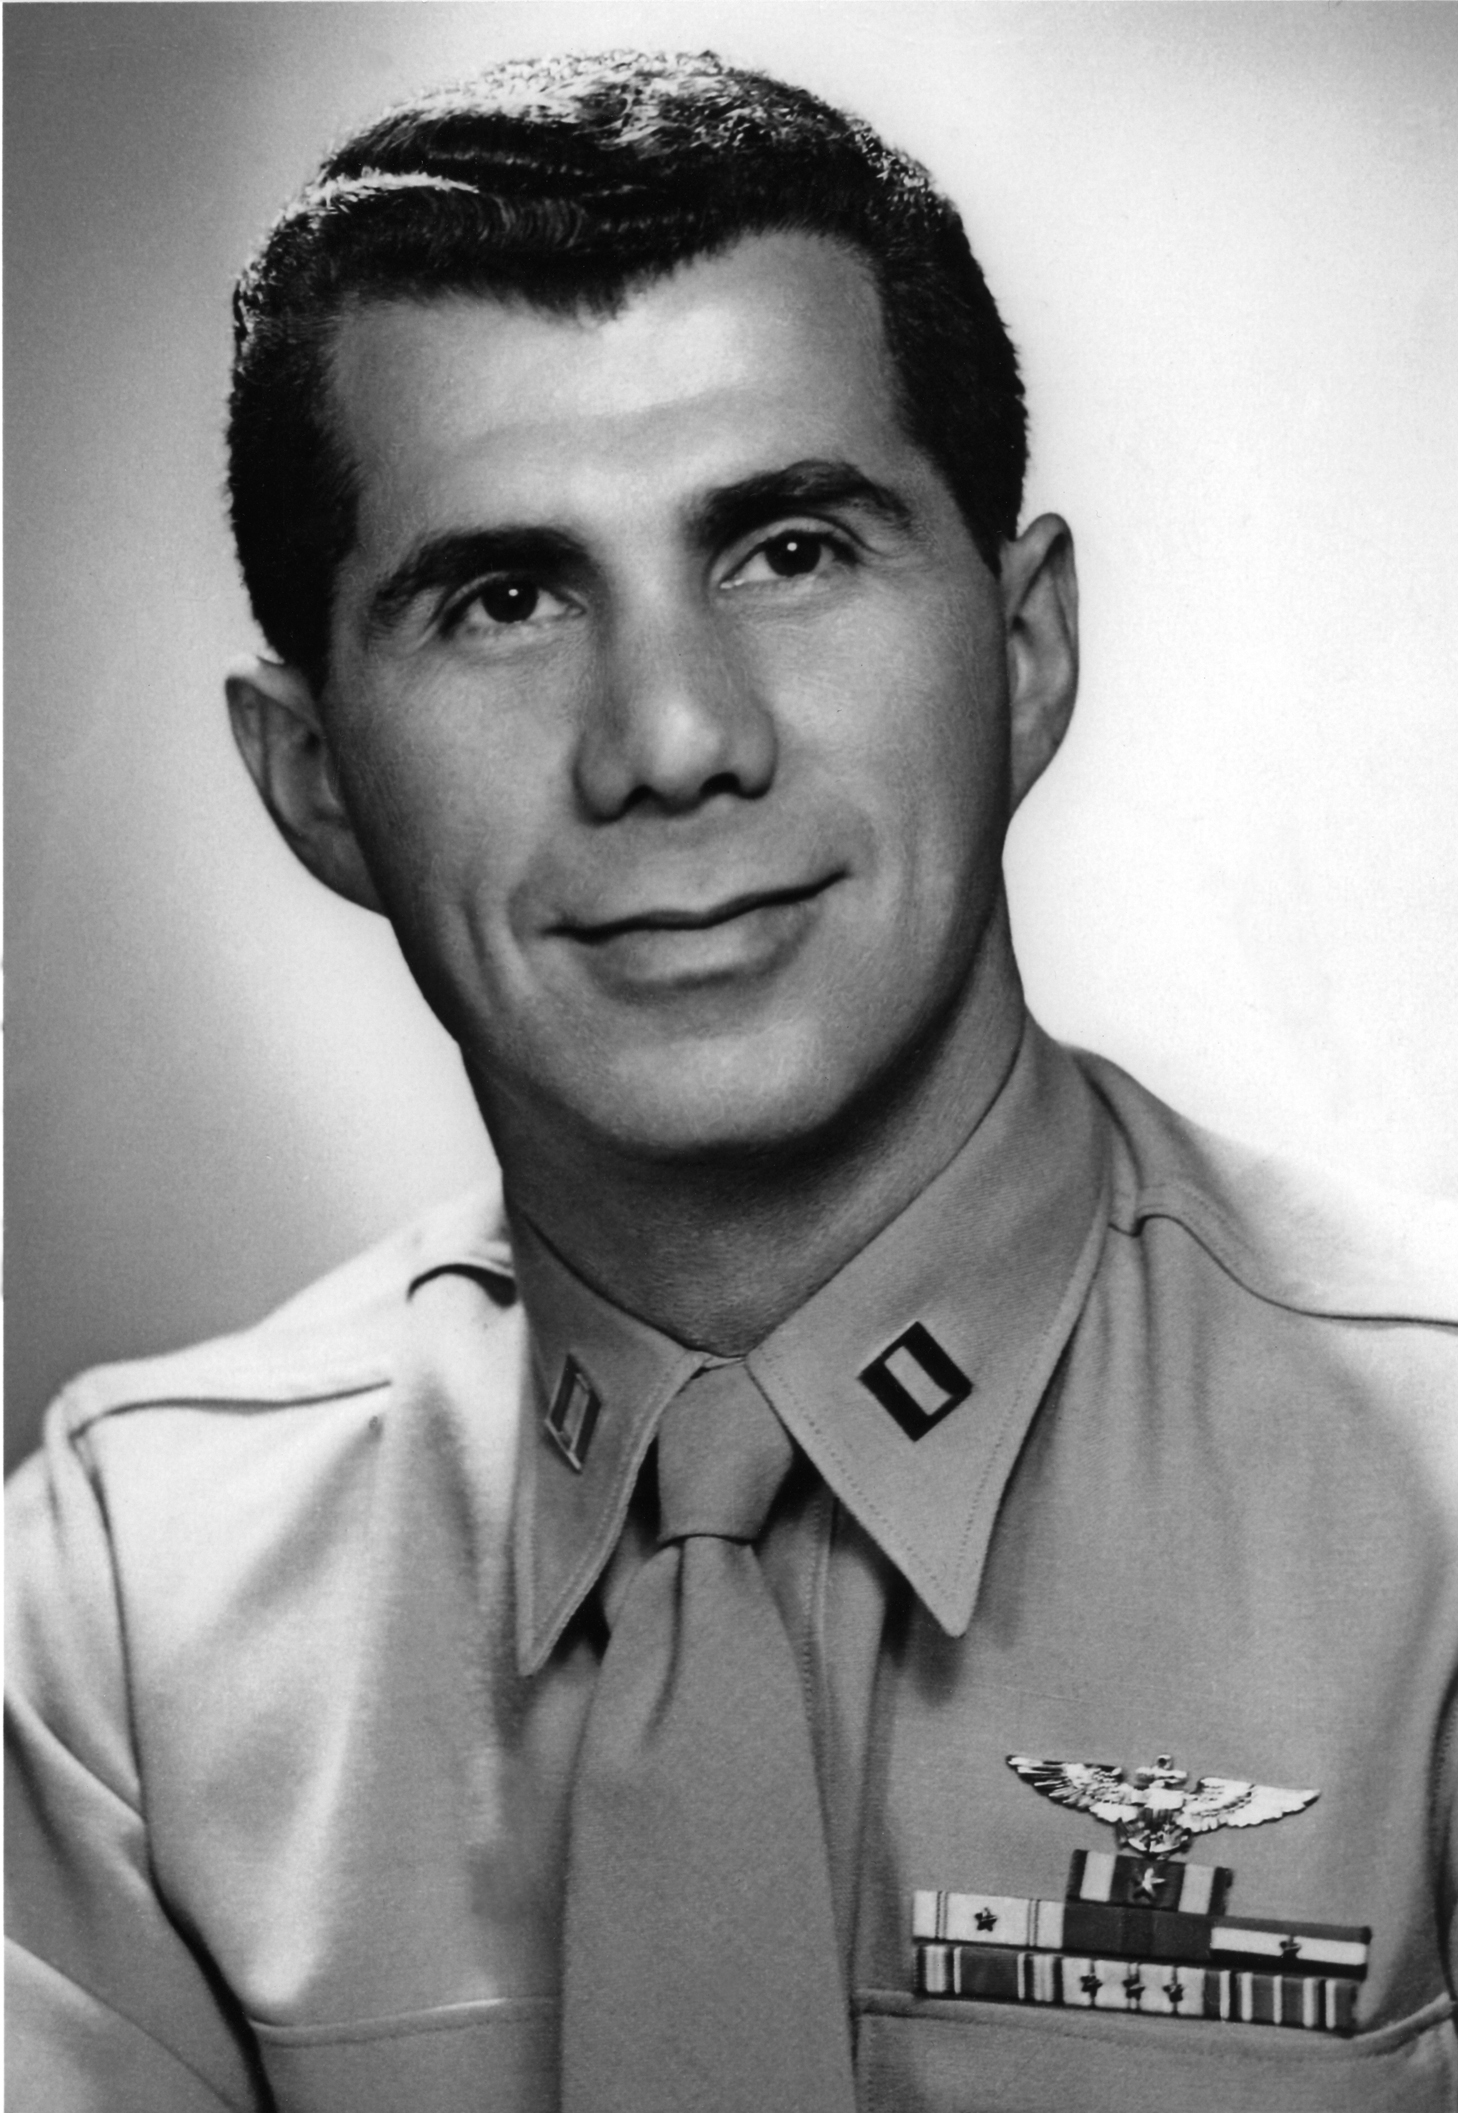 Lou Lenart of the U.S. Marines in 1945.